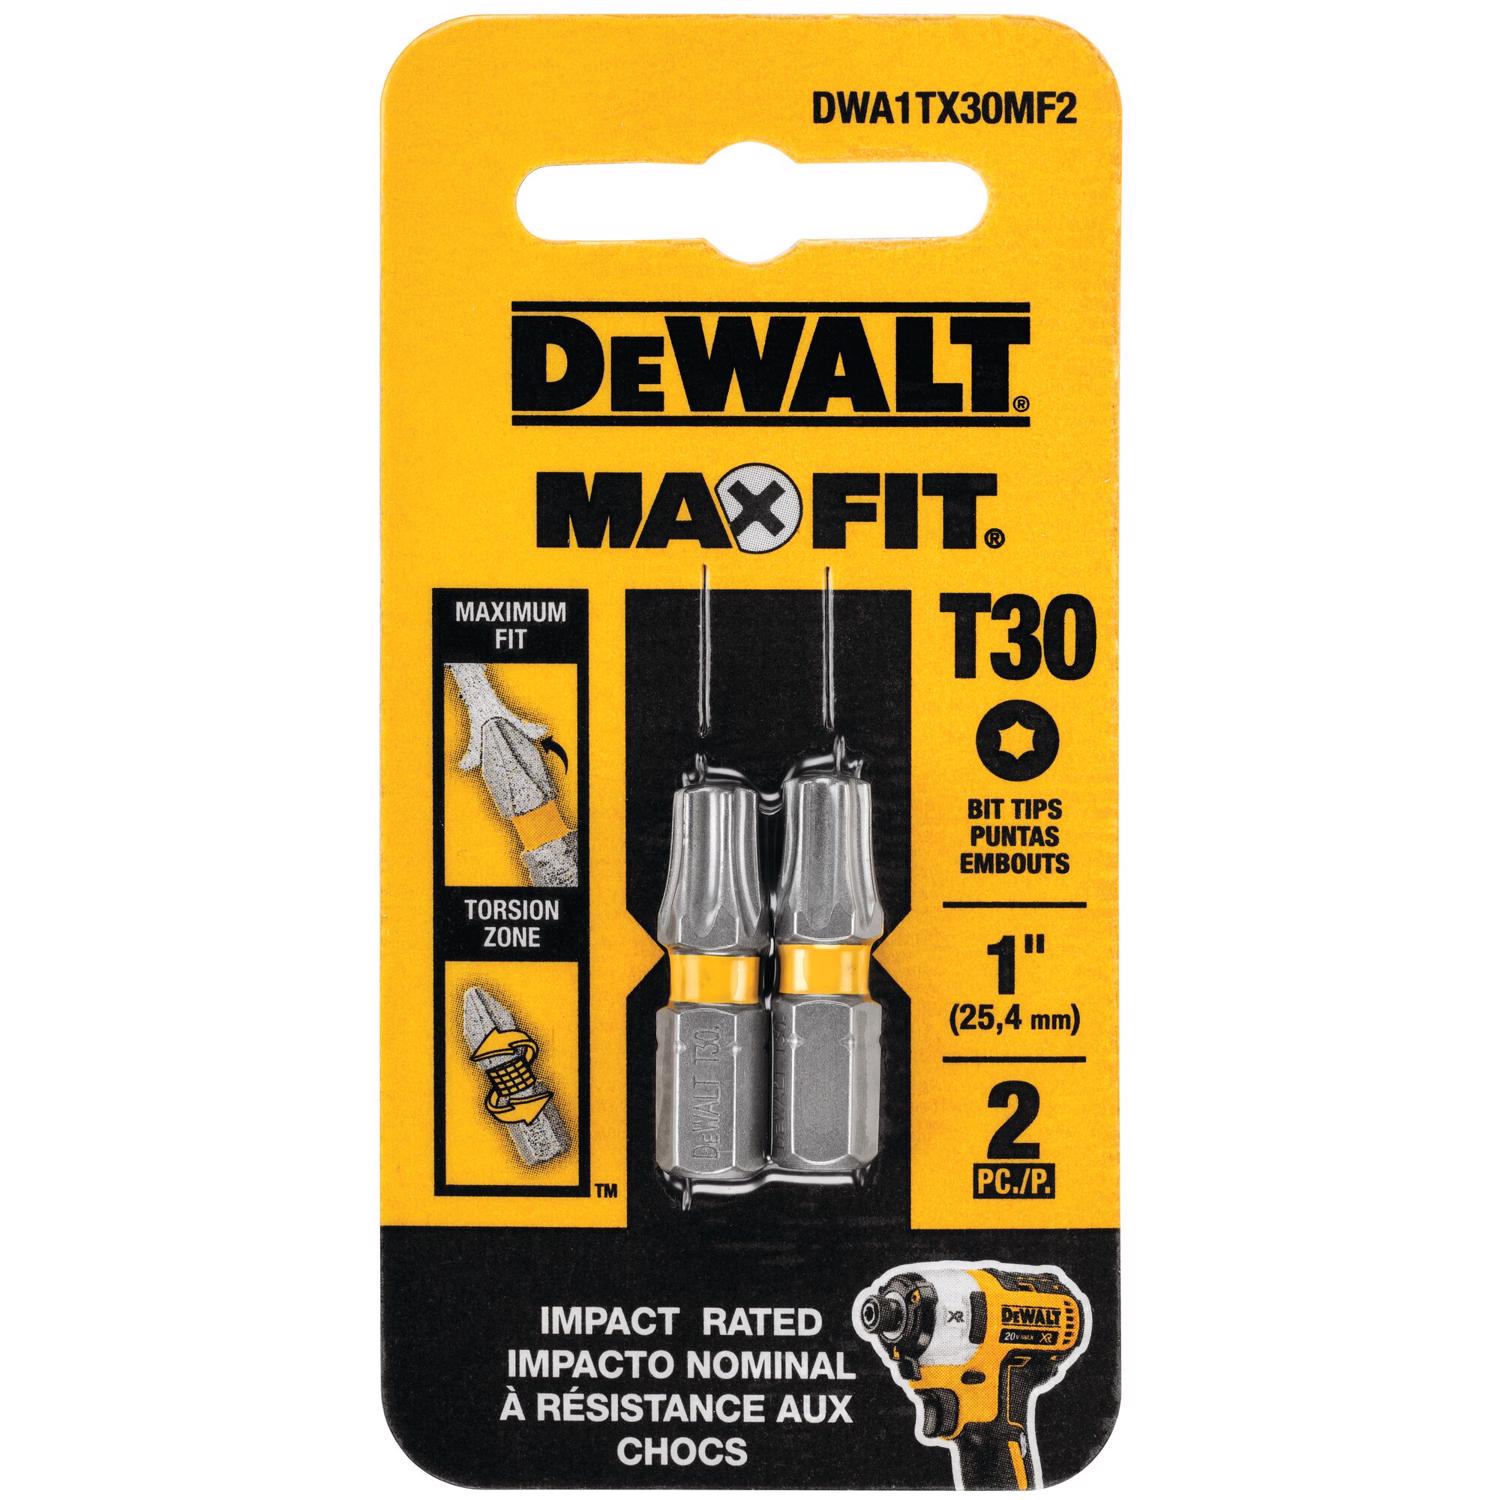 DEWALT MAXFIT Screwdriving Set (150 PC)